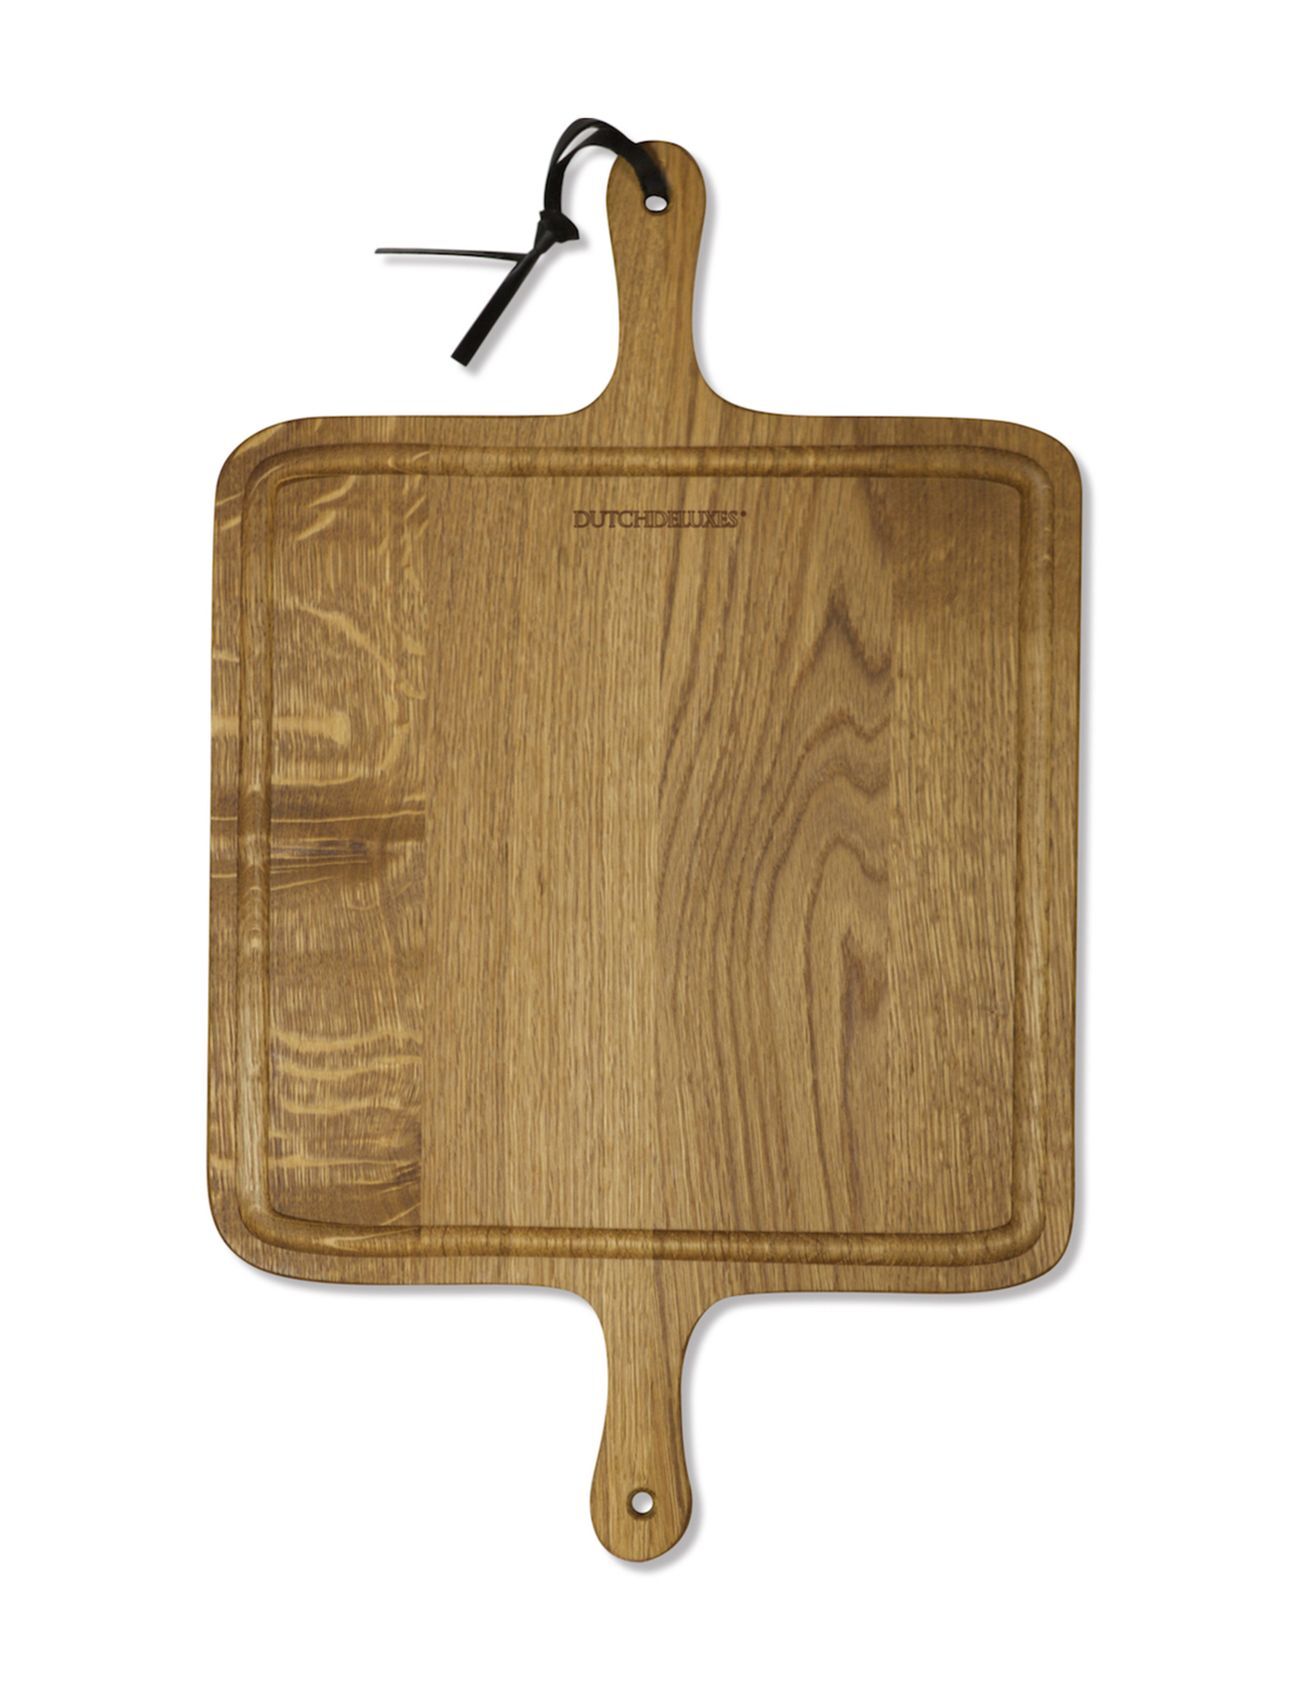 Dutchdeluxes Bbq Board Xl Square Home Kitchen Kitchen Tools Cutting Boards Wooden Cutting Boards Beige Dutchdeluxes